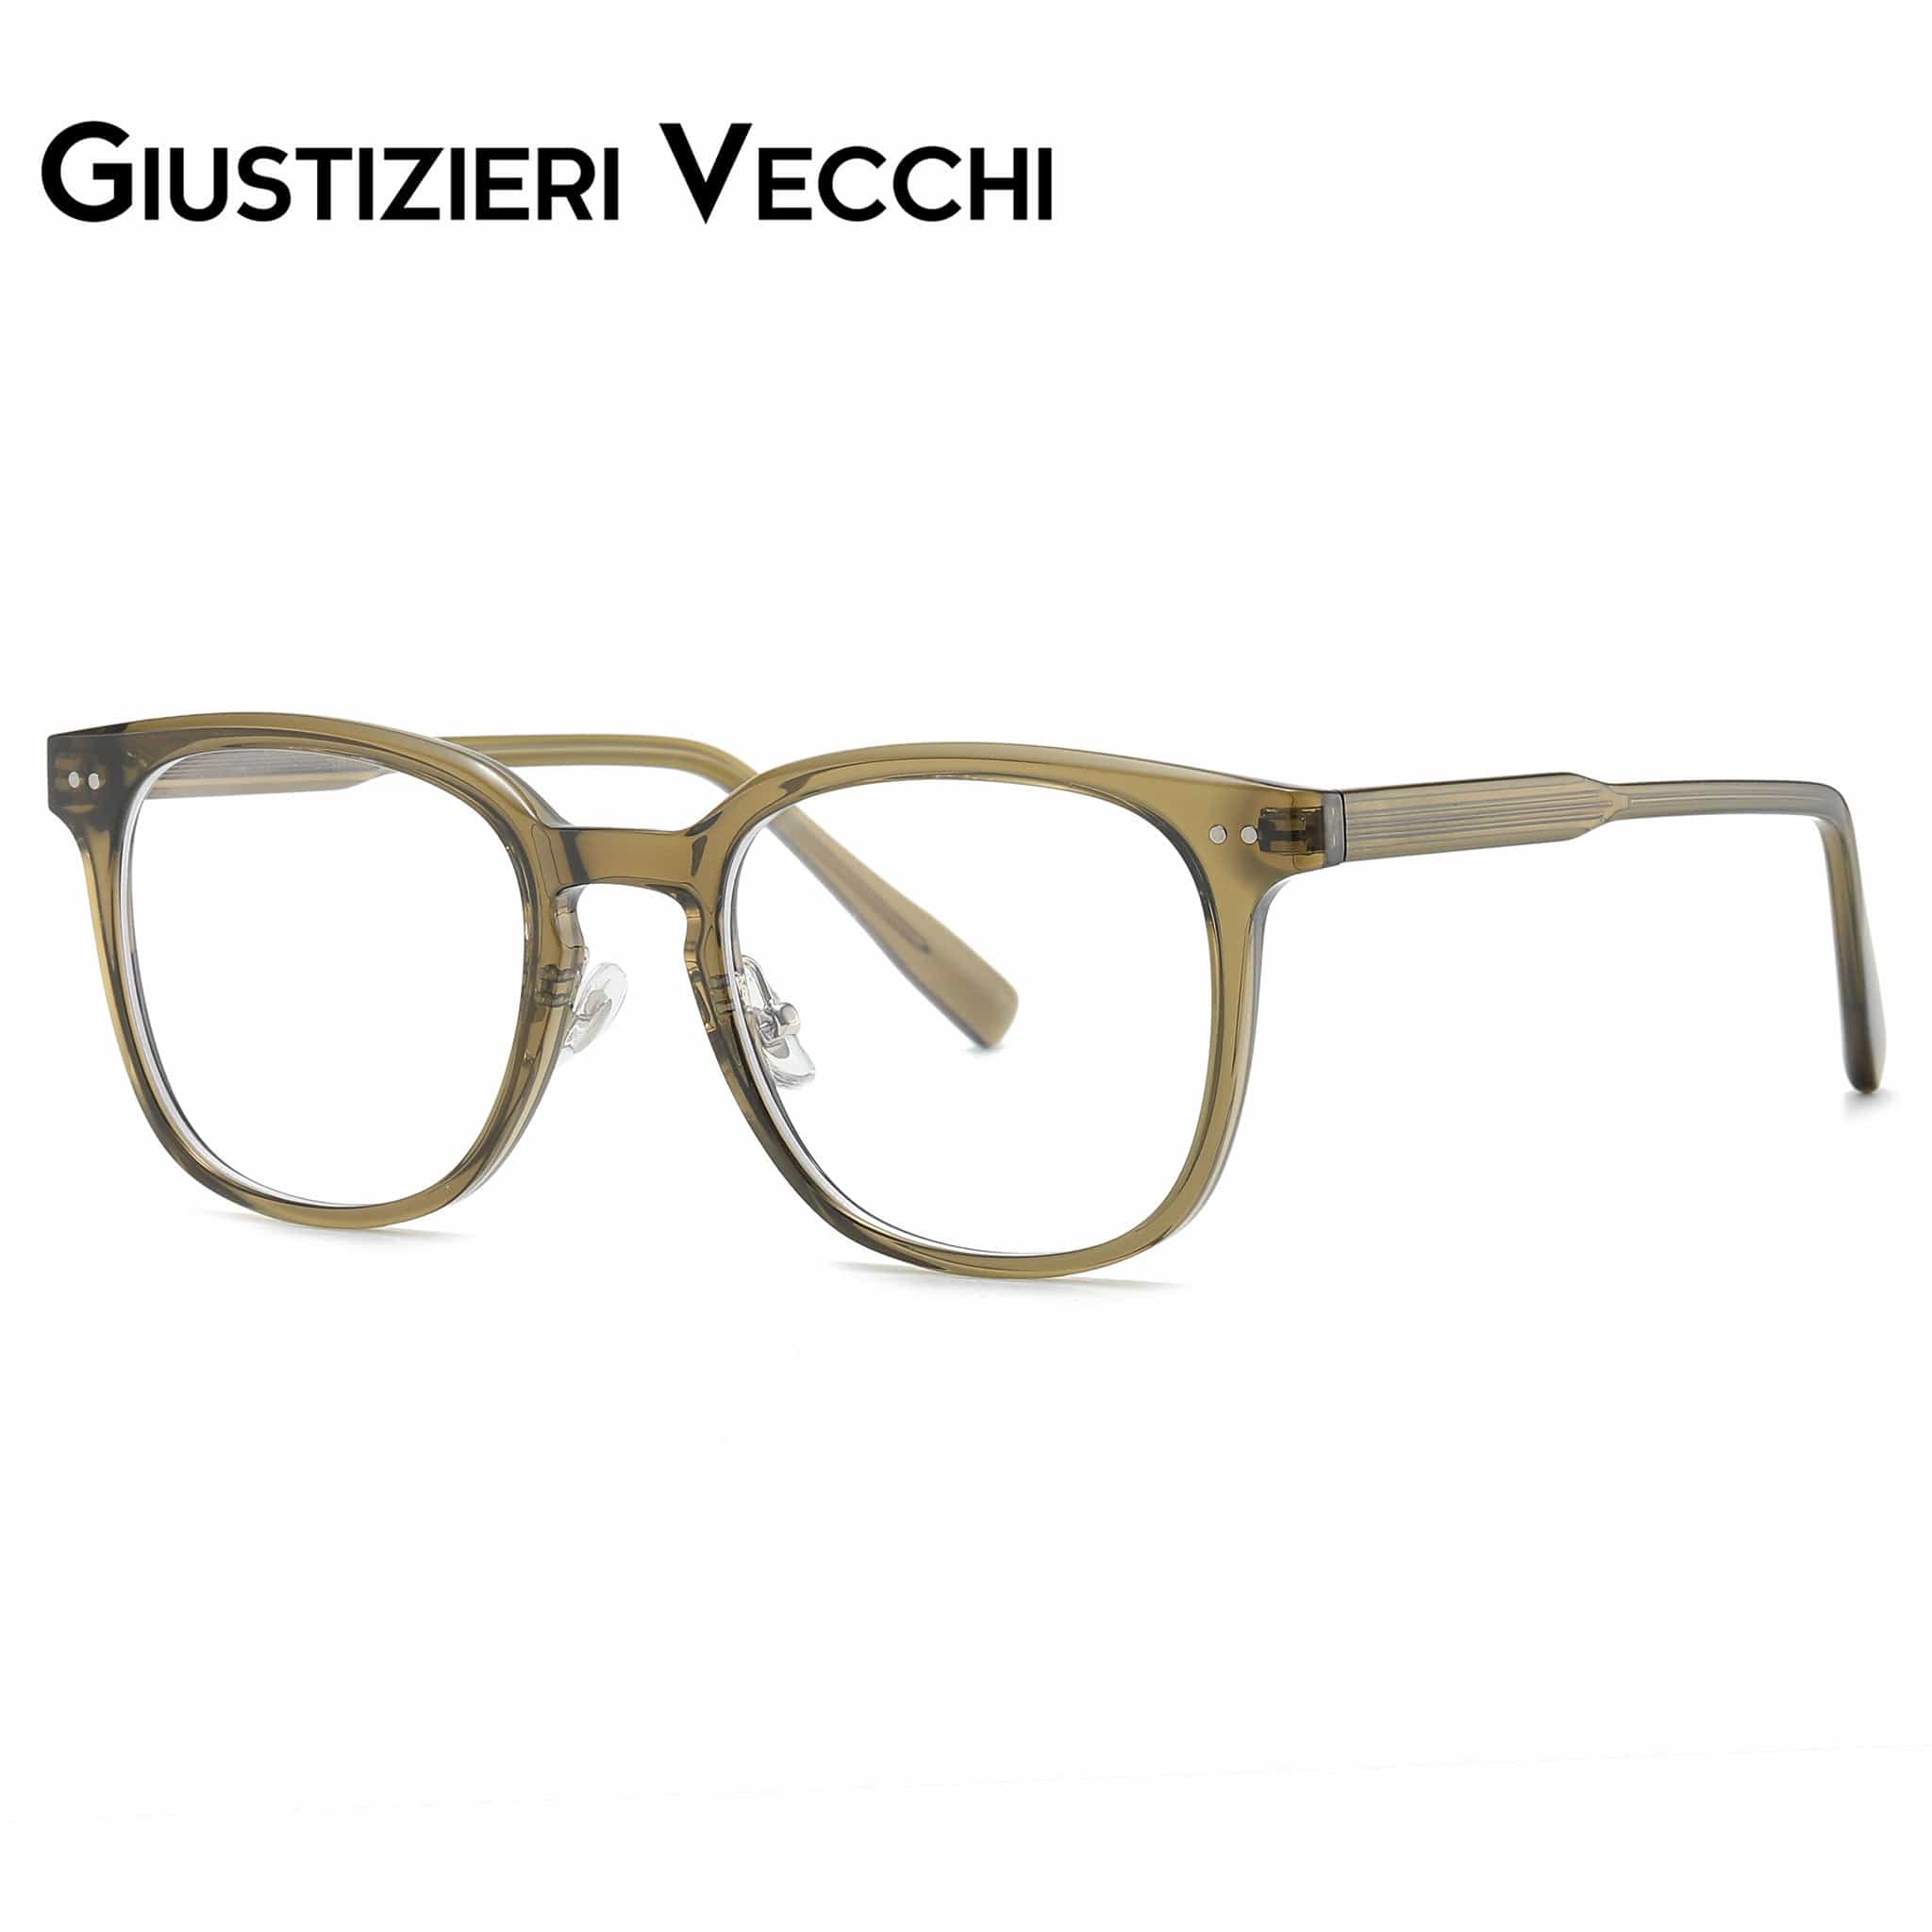 GIUSTIZIERI VECCHI Eyeglasses RomaVista Duo